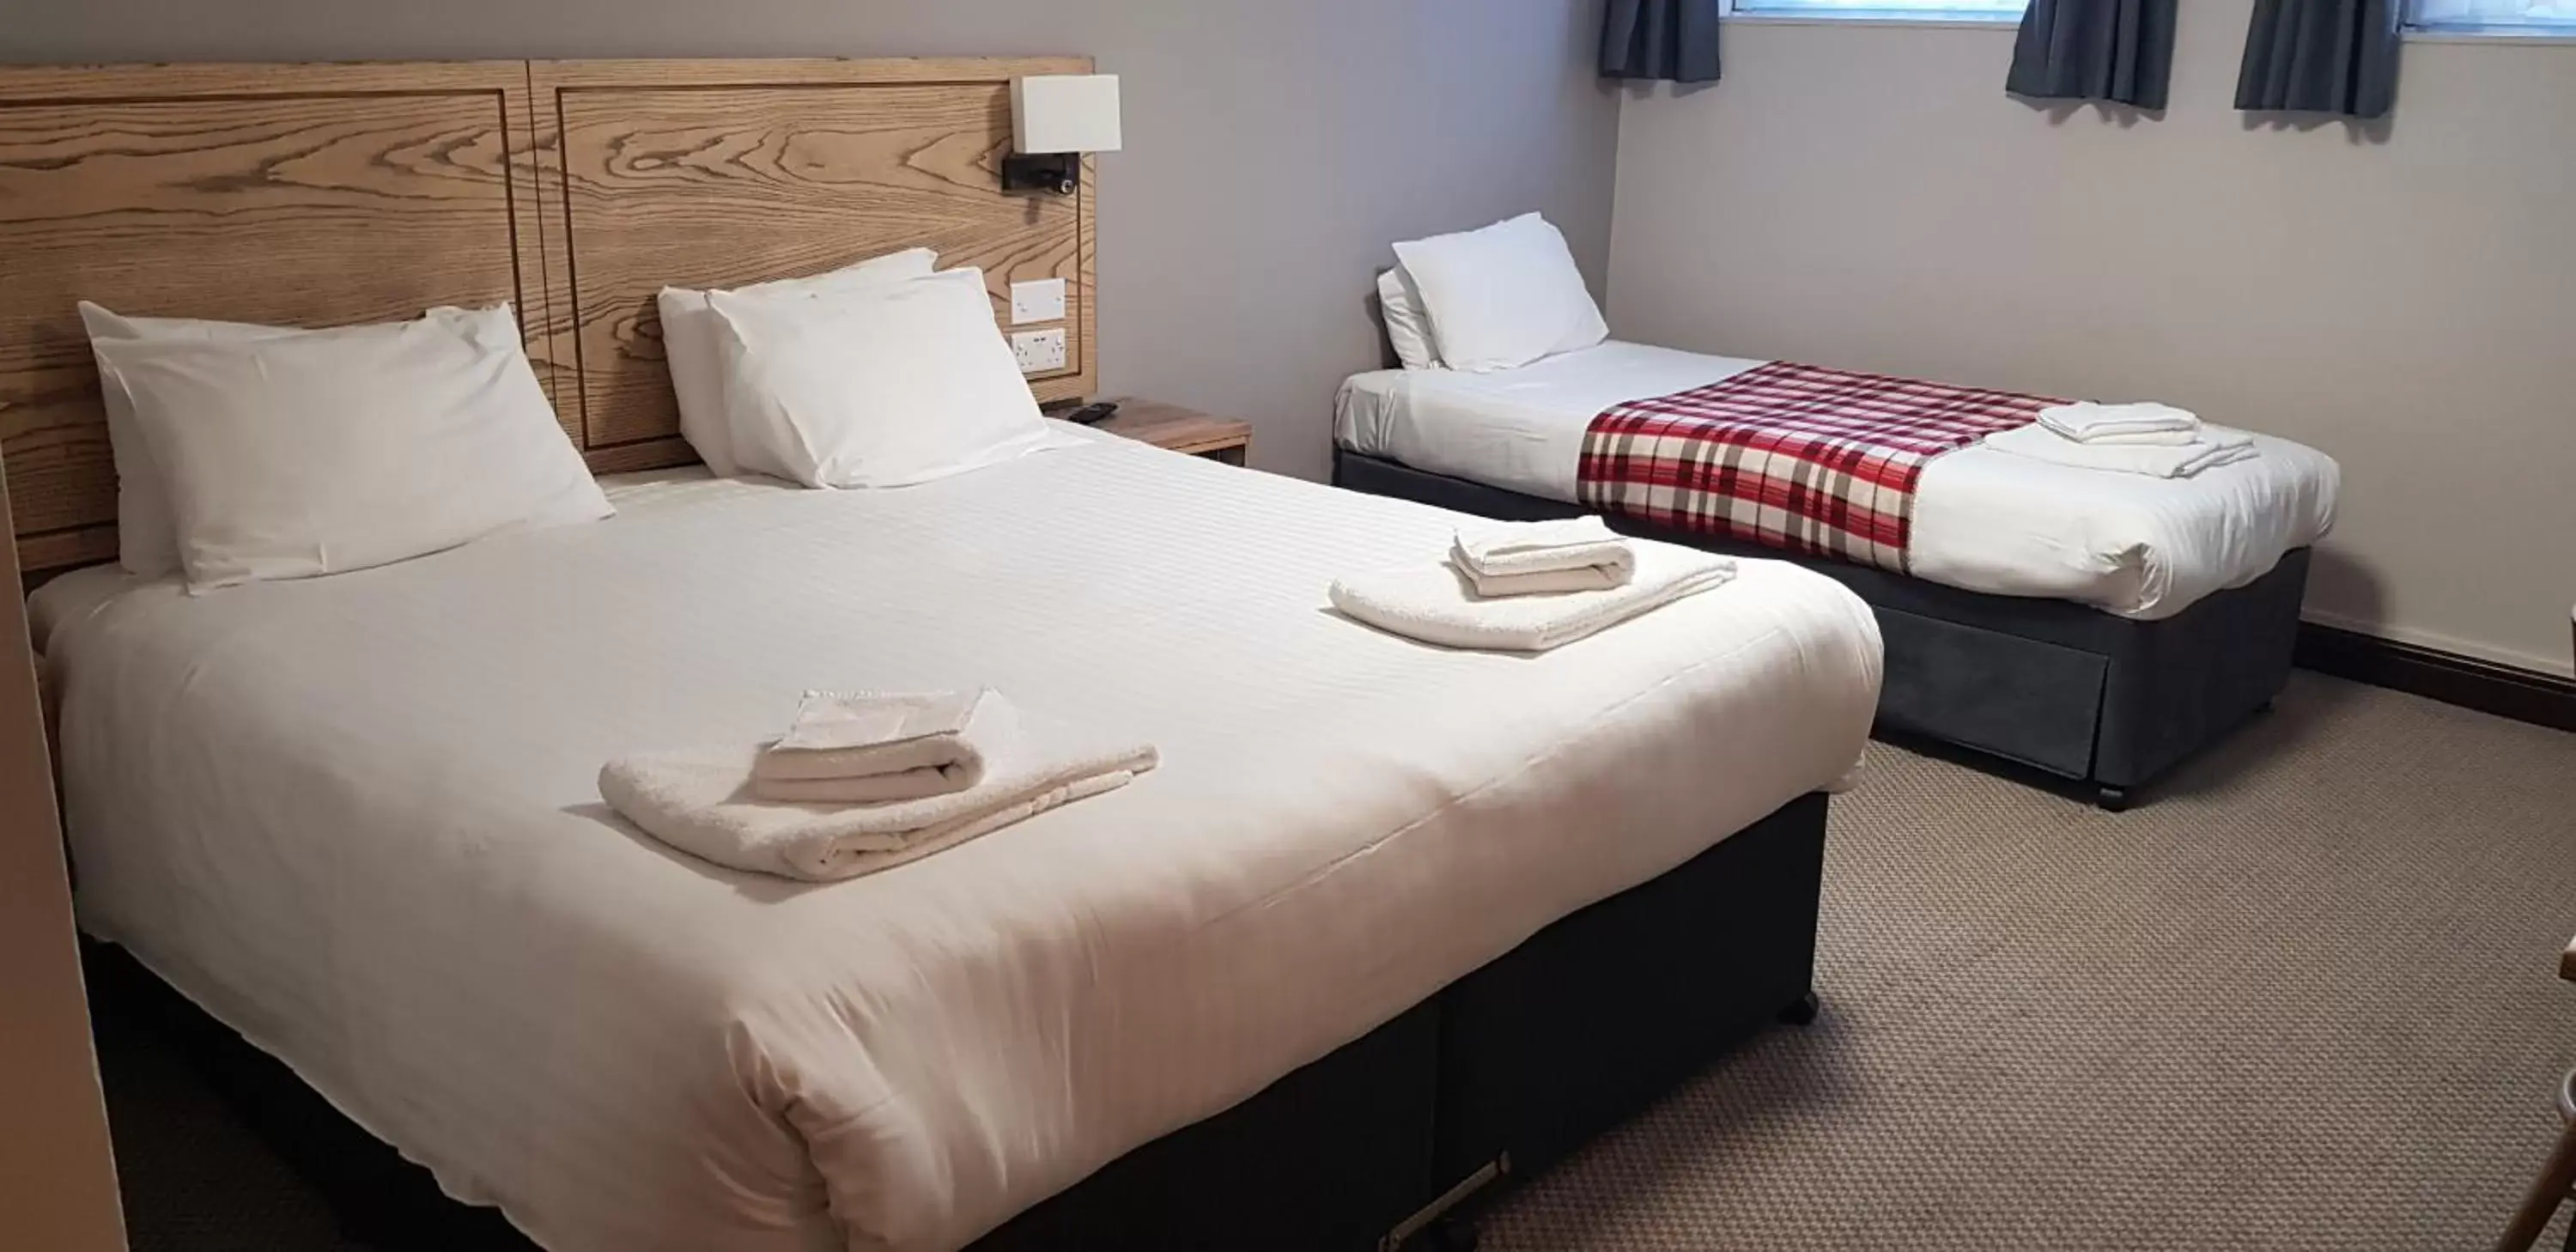 Bedroom, Bed in Waterloo Cross, Devon by Marston's Inns